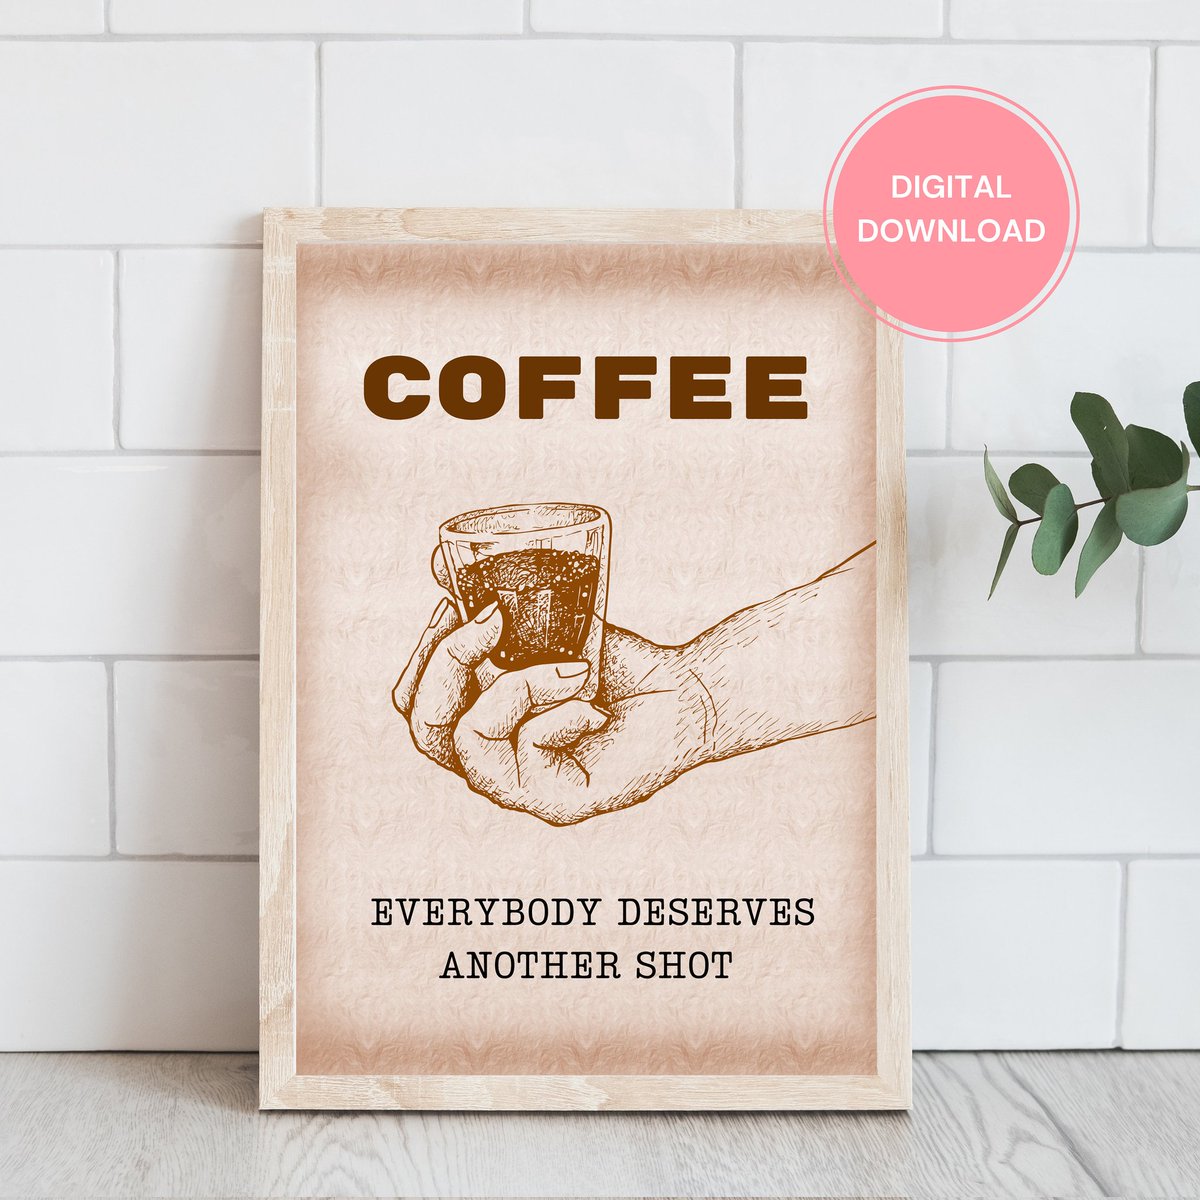 prittyprintable.etsy.com/listing/163544…

#coffee #CoffeeTime #CoffeeLover #coffeelovers #morning #sunisup #barsign #coffeeshop #coffeesign #barcart #shot #chance #americano #BlackCoffee